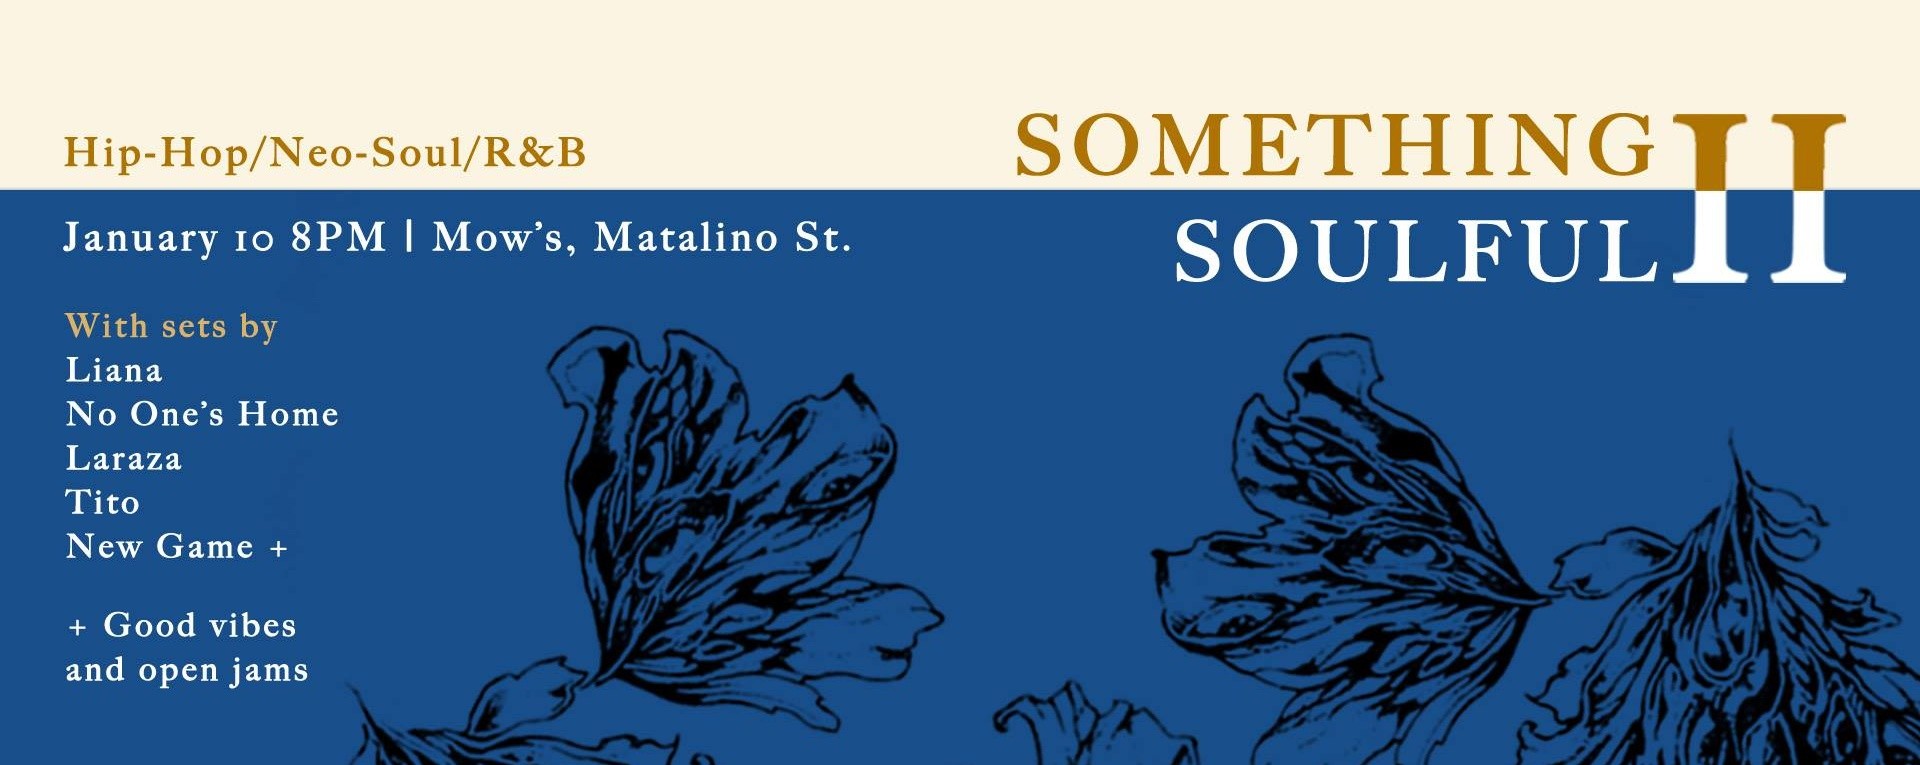 Something Soulful Vol. 2